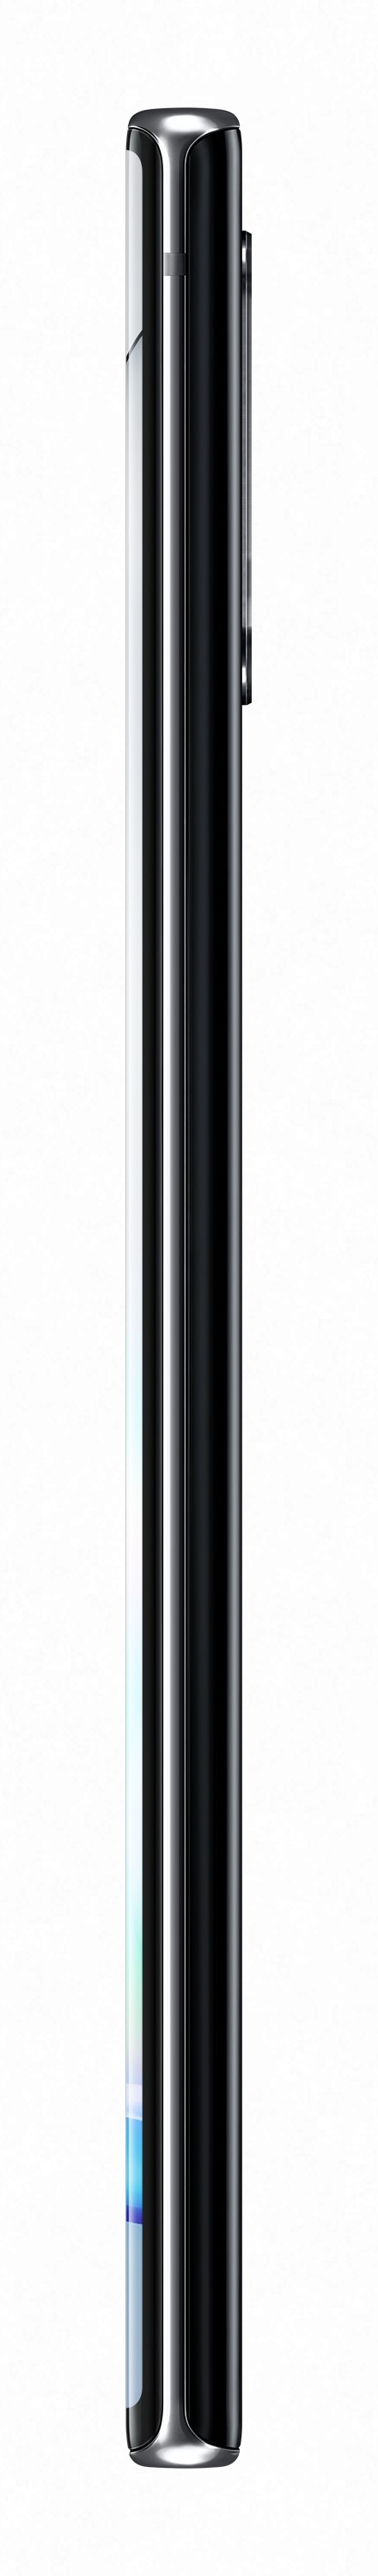 Samsung Galaxy Note10+ Smartphone 256GB Aura Black